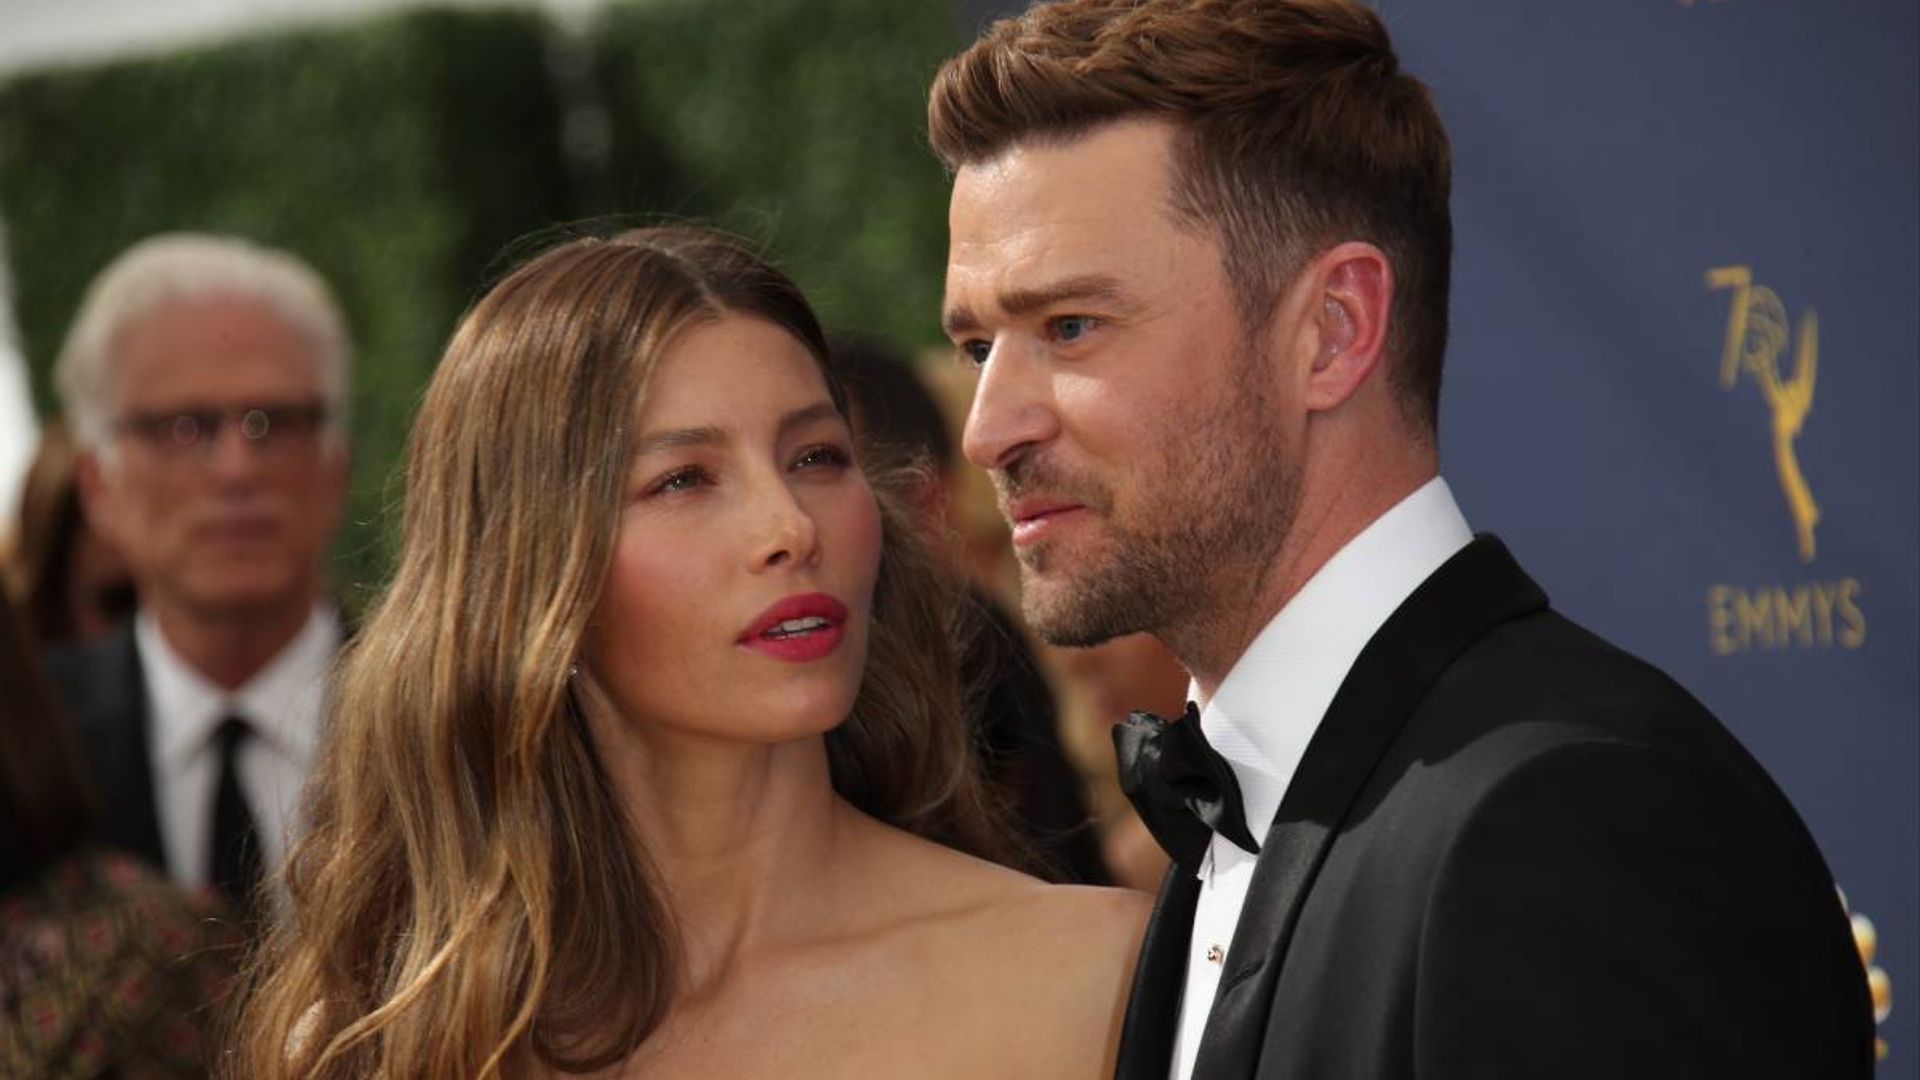 Jessica Biel shocks fans with Justin Timberlake's unrecognizable transformation